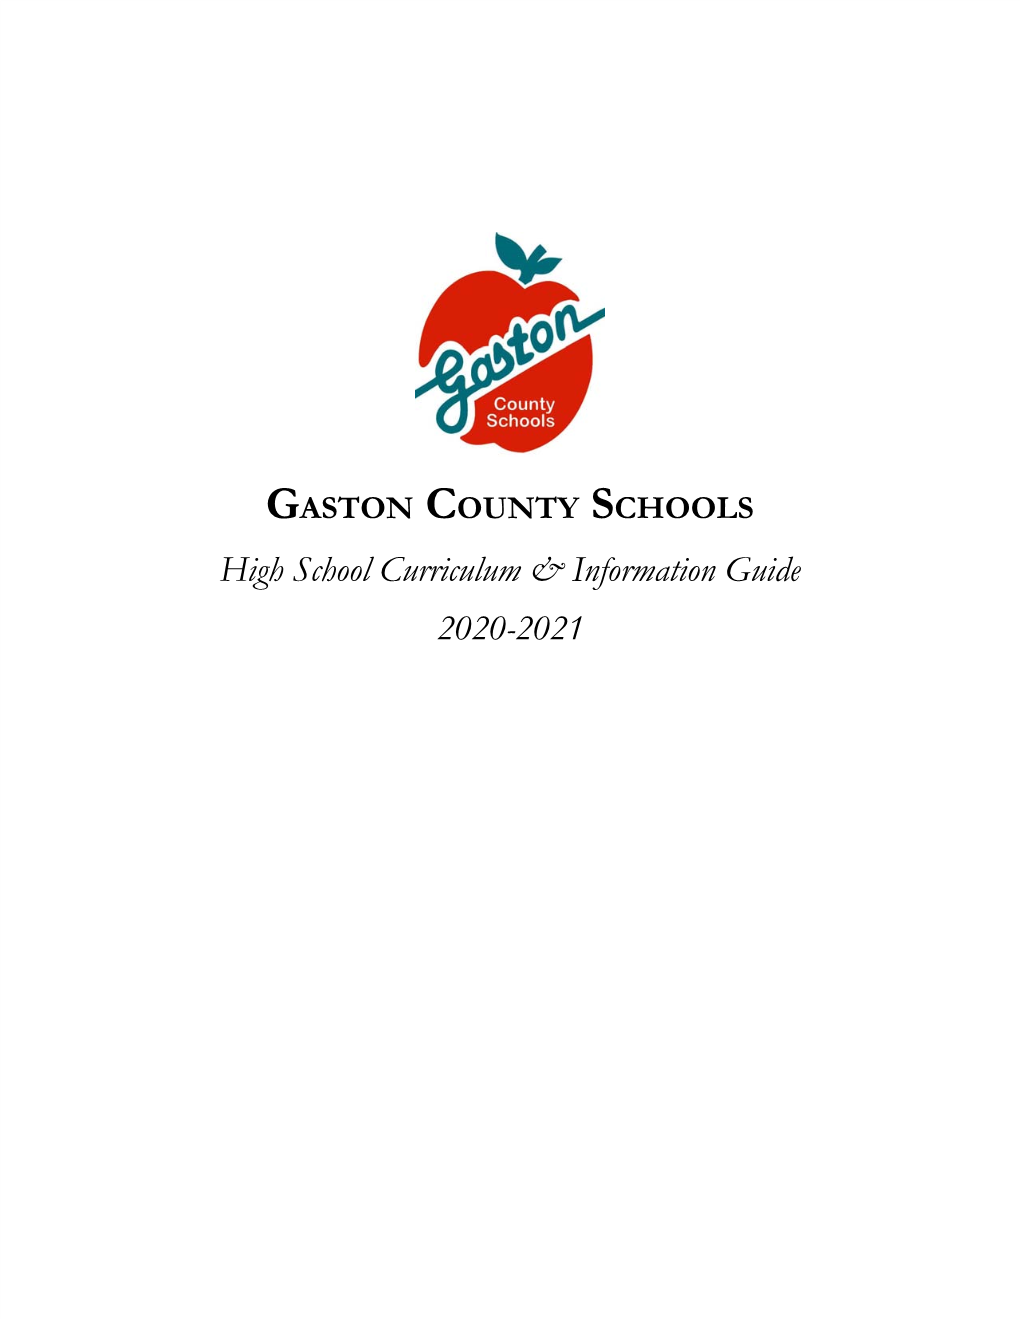 High School Curriculum & Information Guide 2020-2021